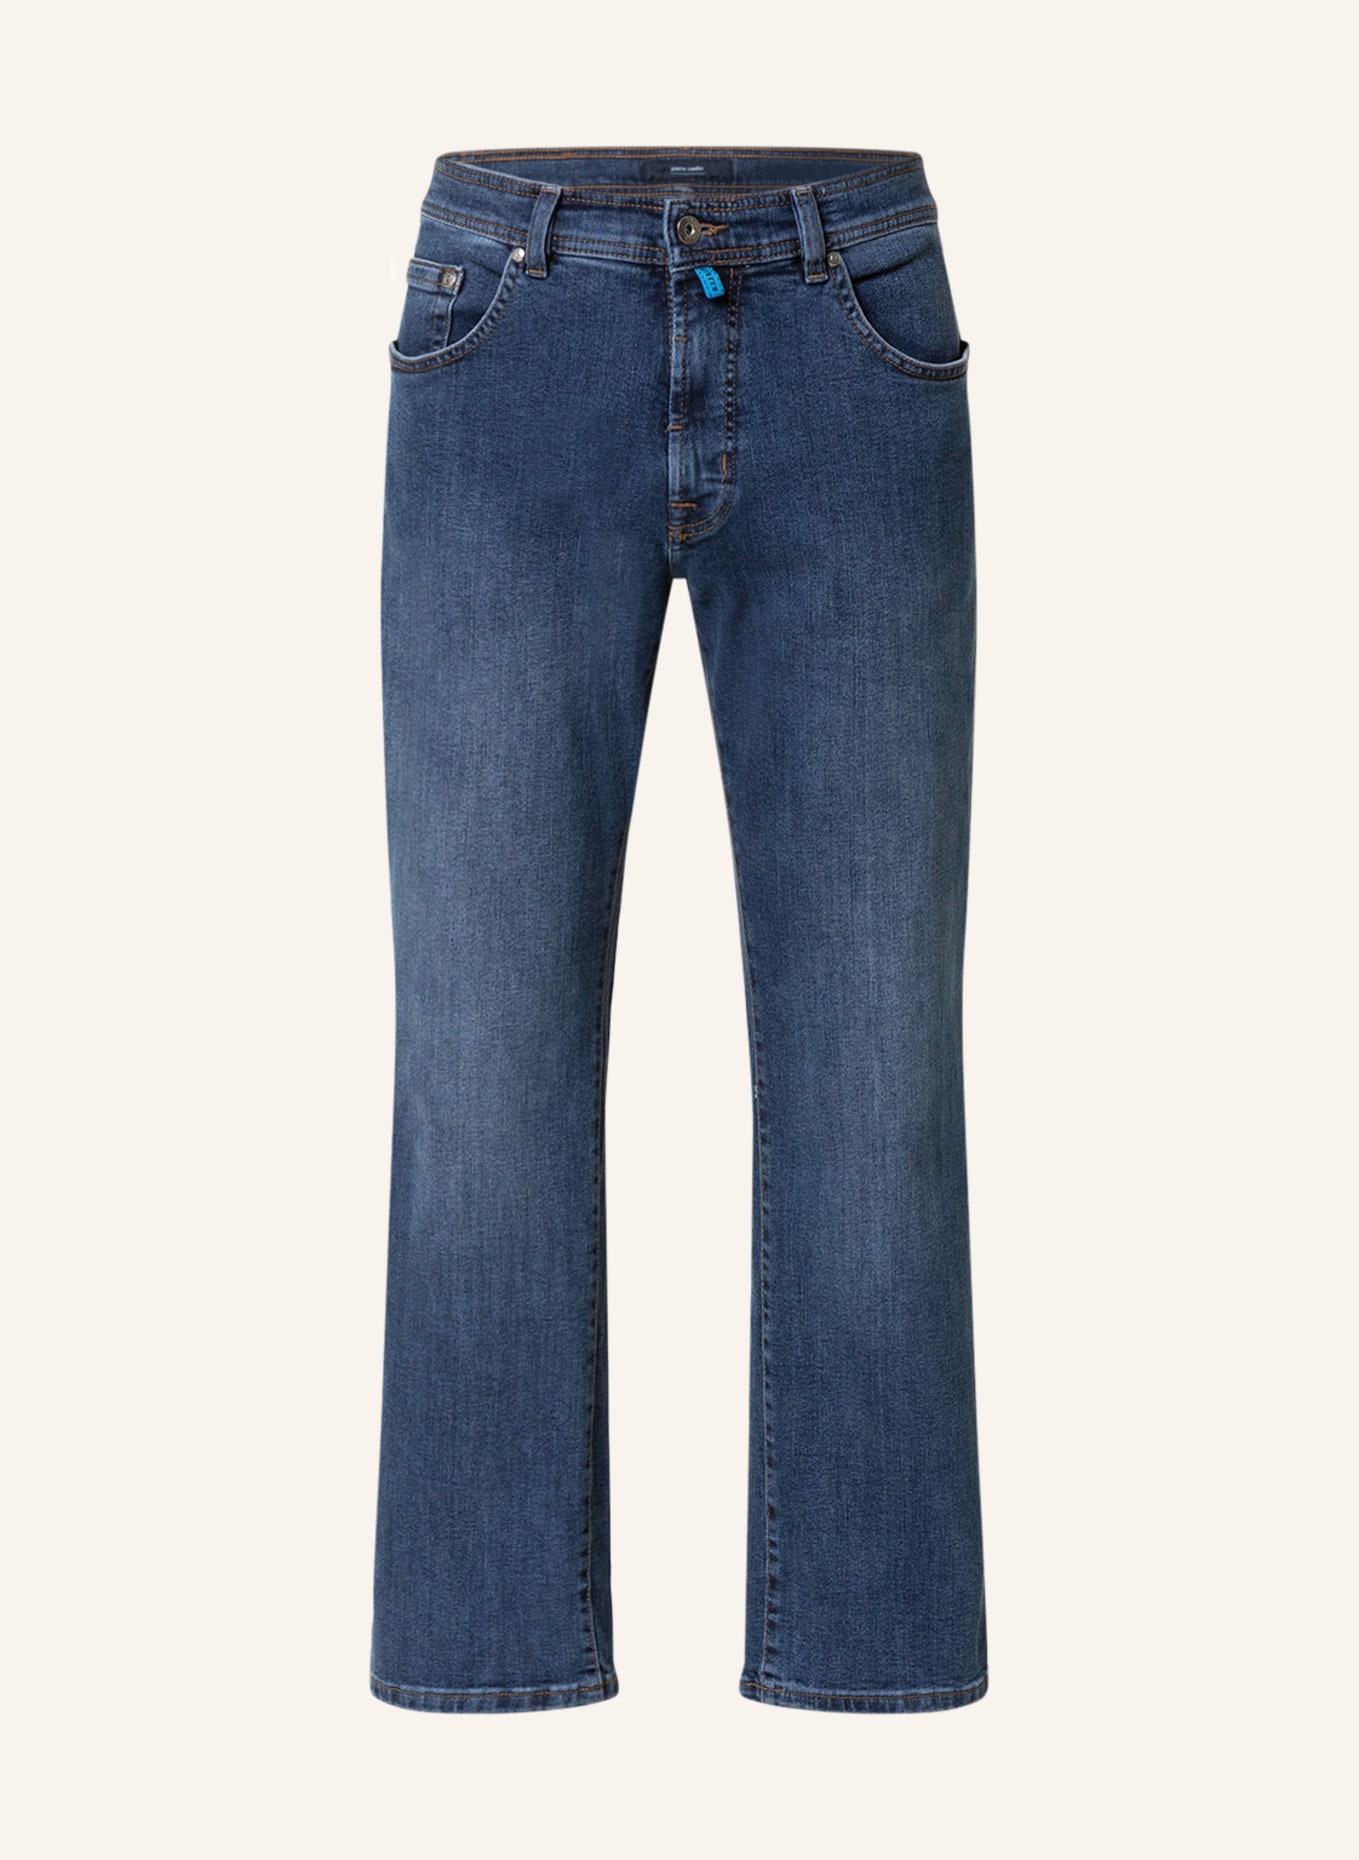 pierre cardin Jeans DIJON Comfort Fit , Farbe: 6812 dark blue used (Bild 1)